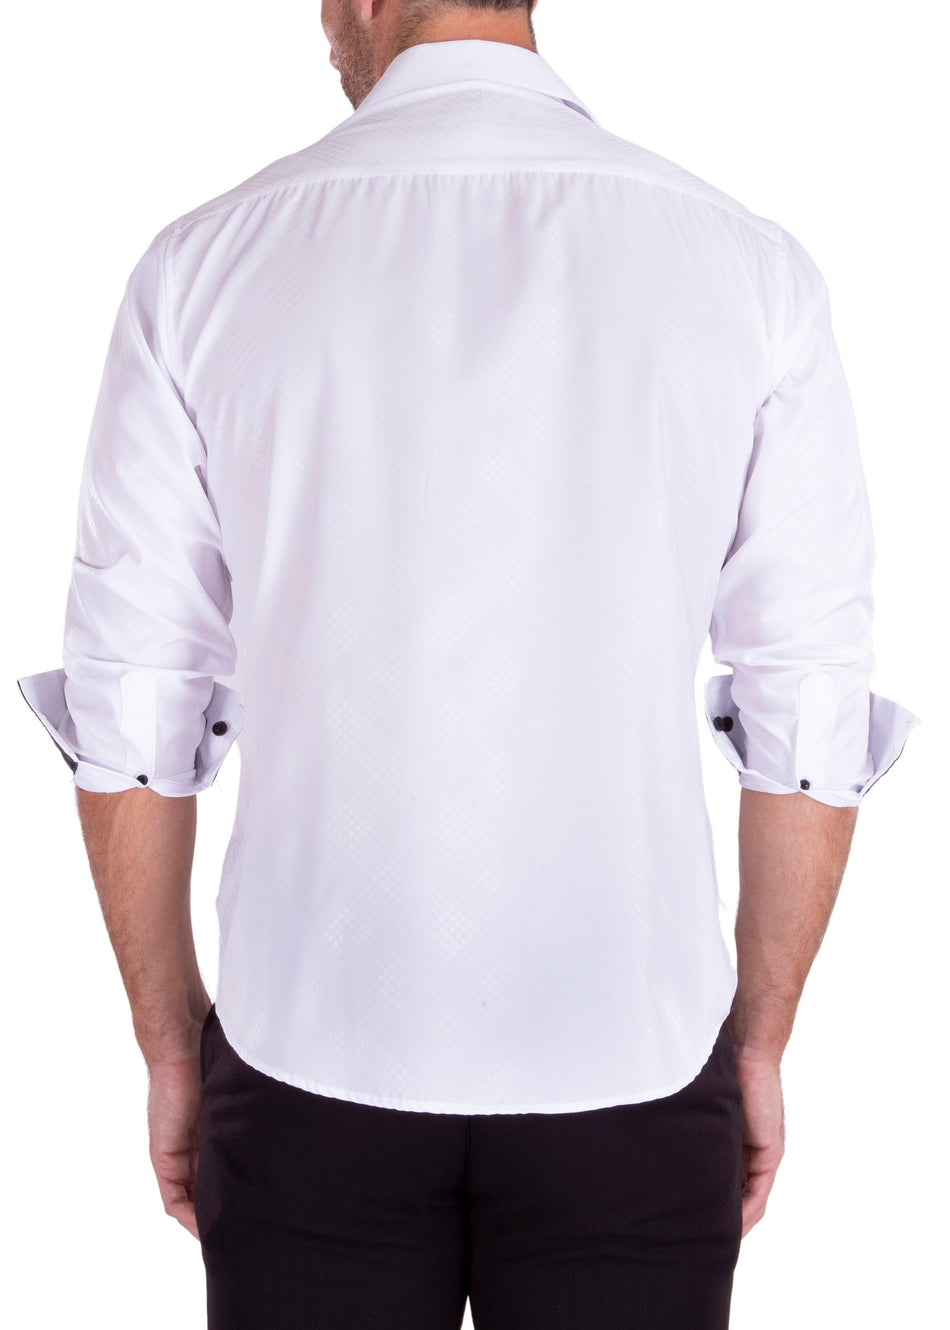 Metallic Criss-Cross Pattern Long Sleeve Dress Shirt White